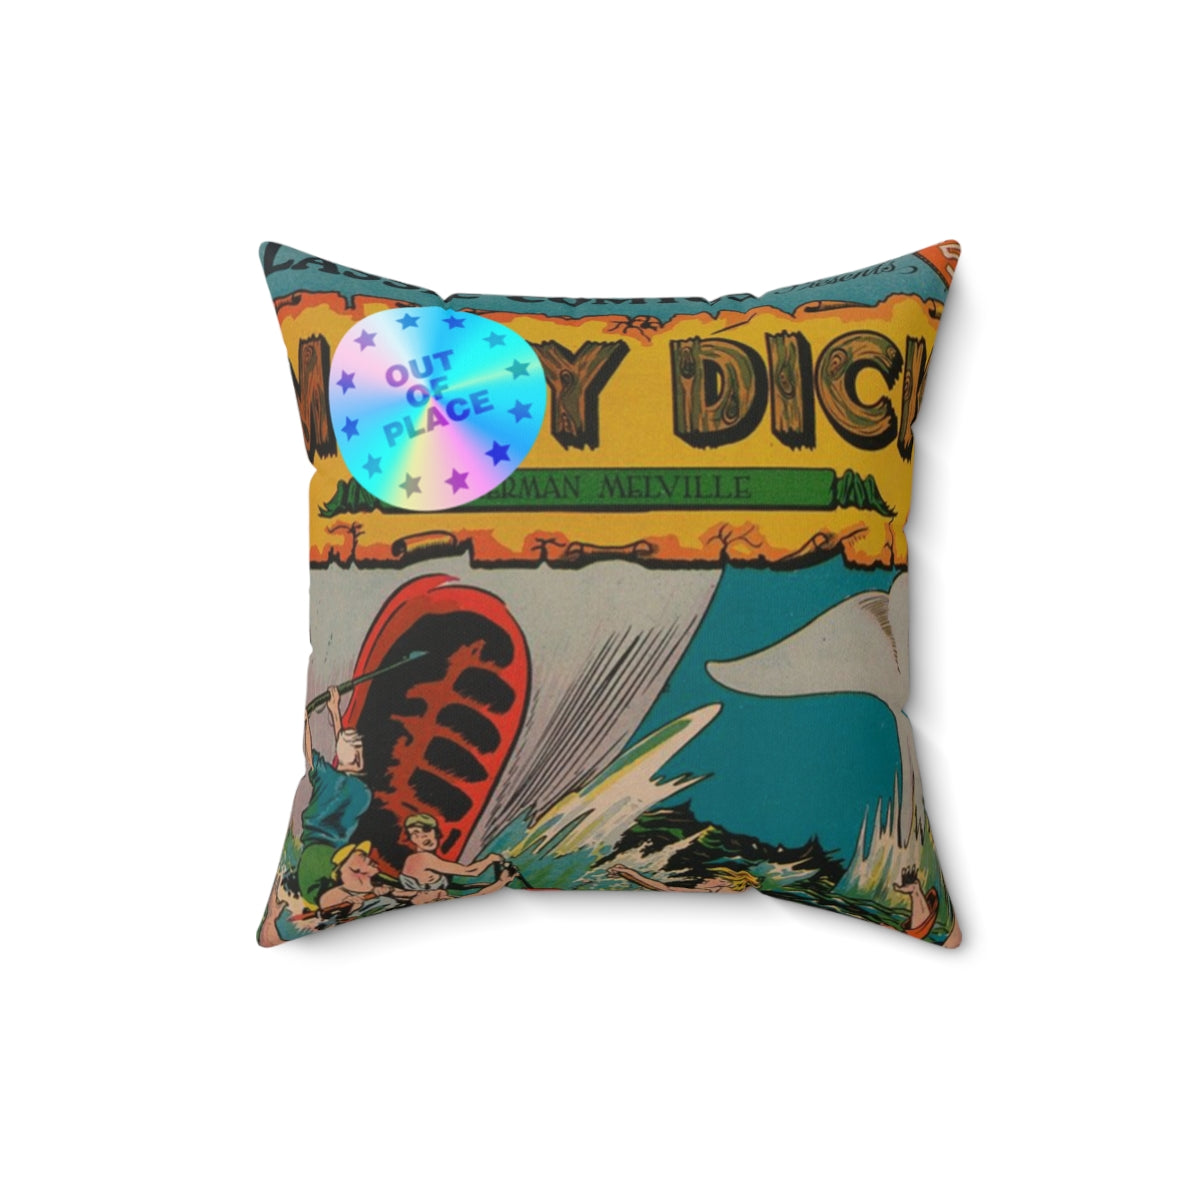 Moby Dick Throw Pillow